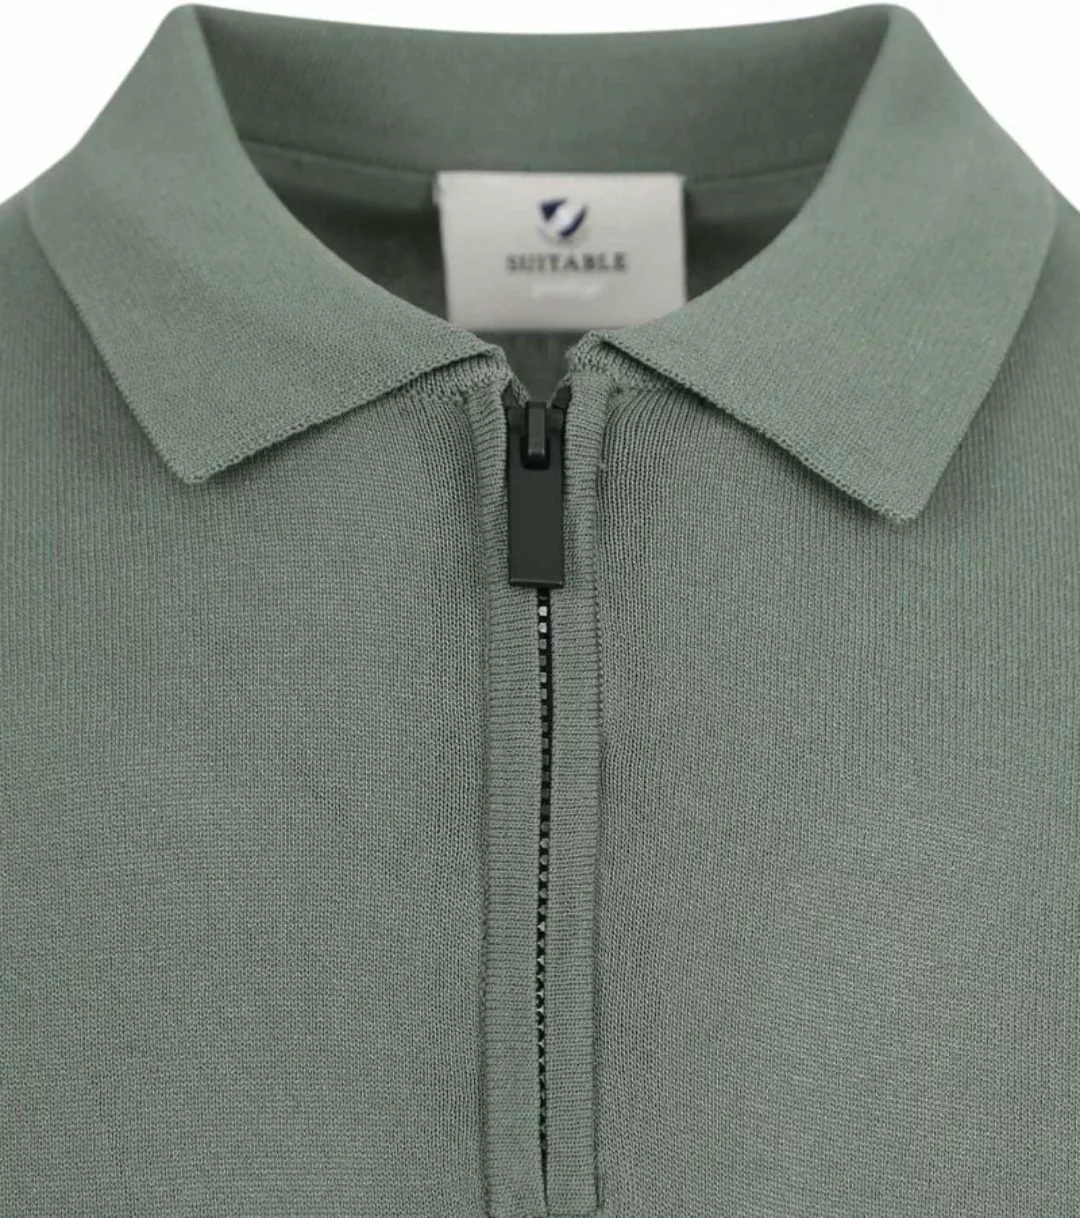 Suitable Cool Dry Knit Poloshirt Grün - Größe XXL günstig online kaufen